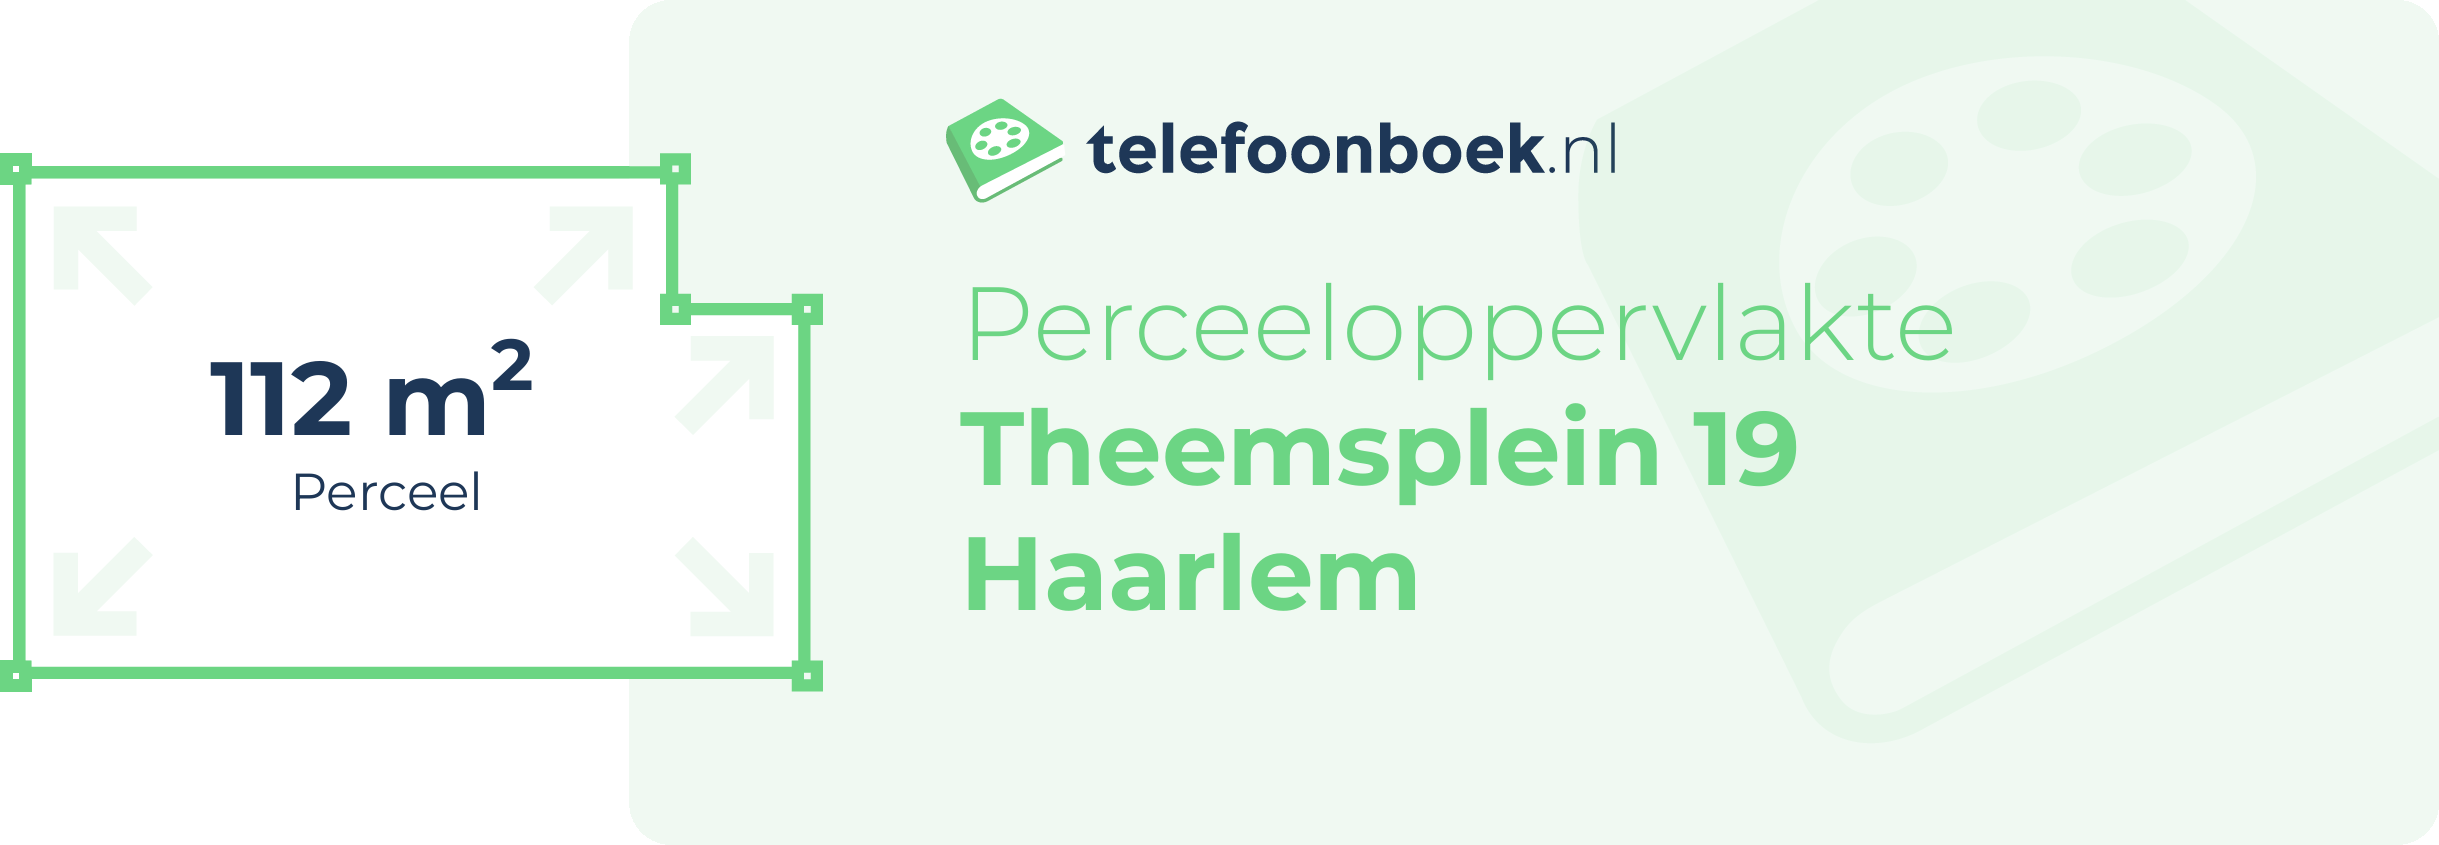 Perceeloppervlakte Theemsplein 19 Haarlem